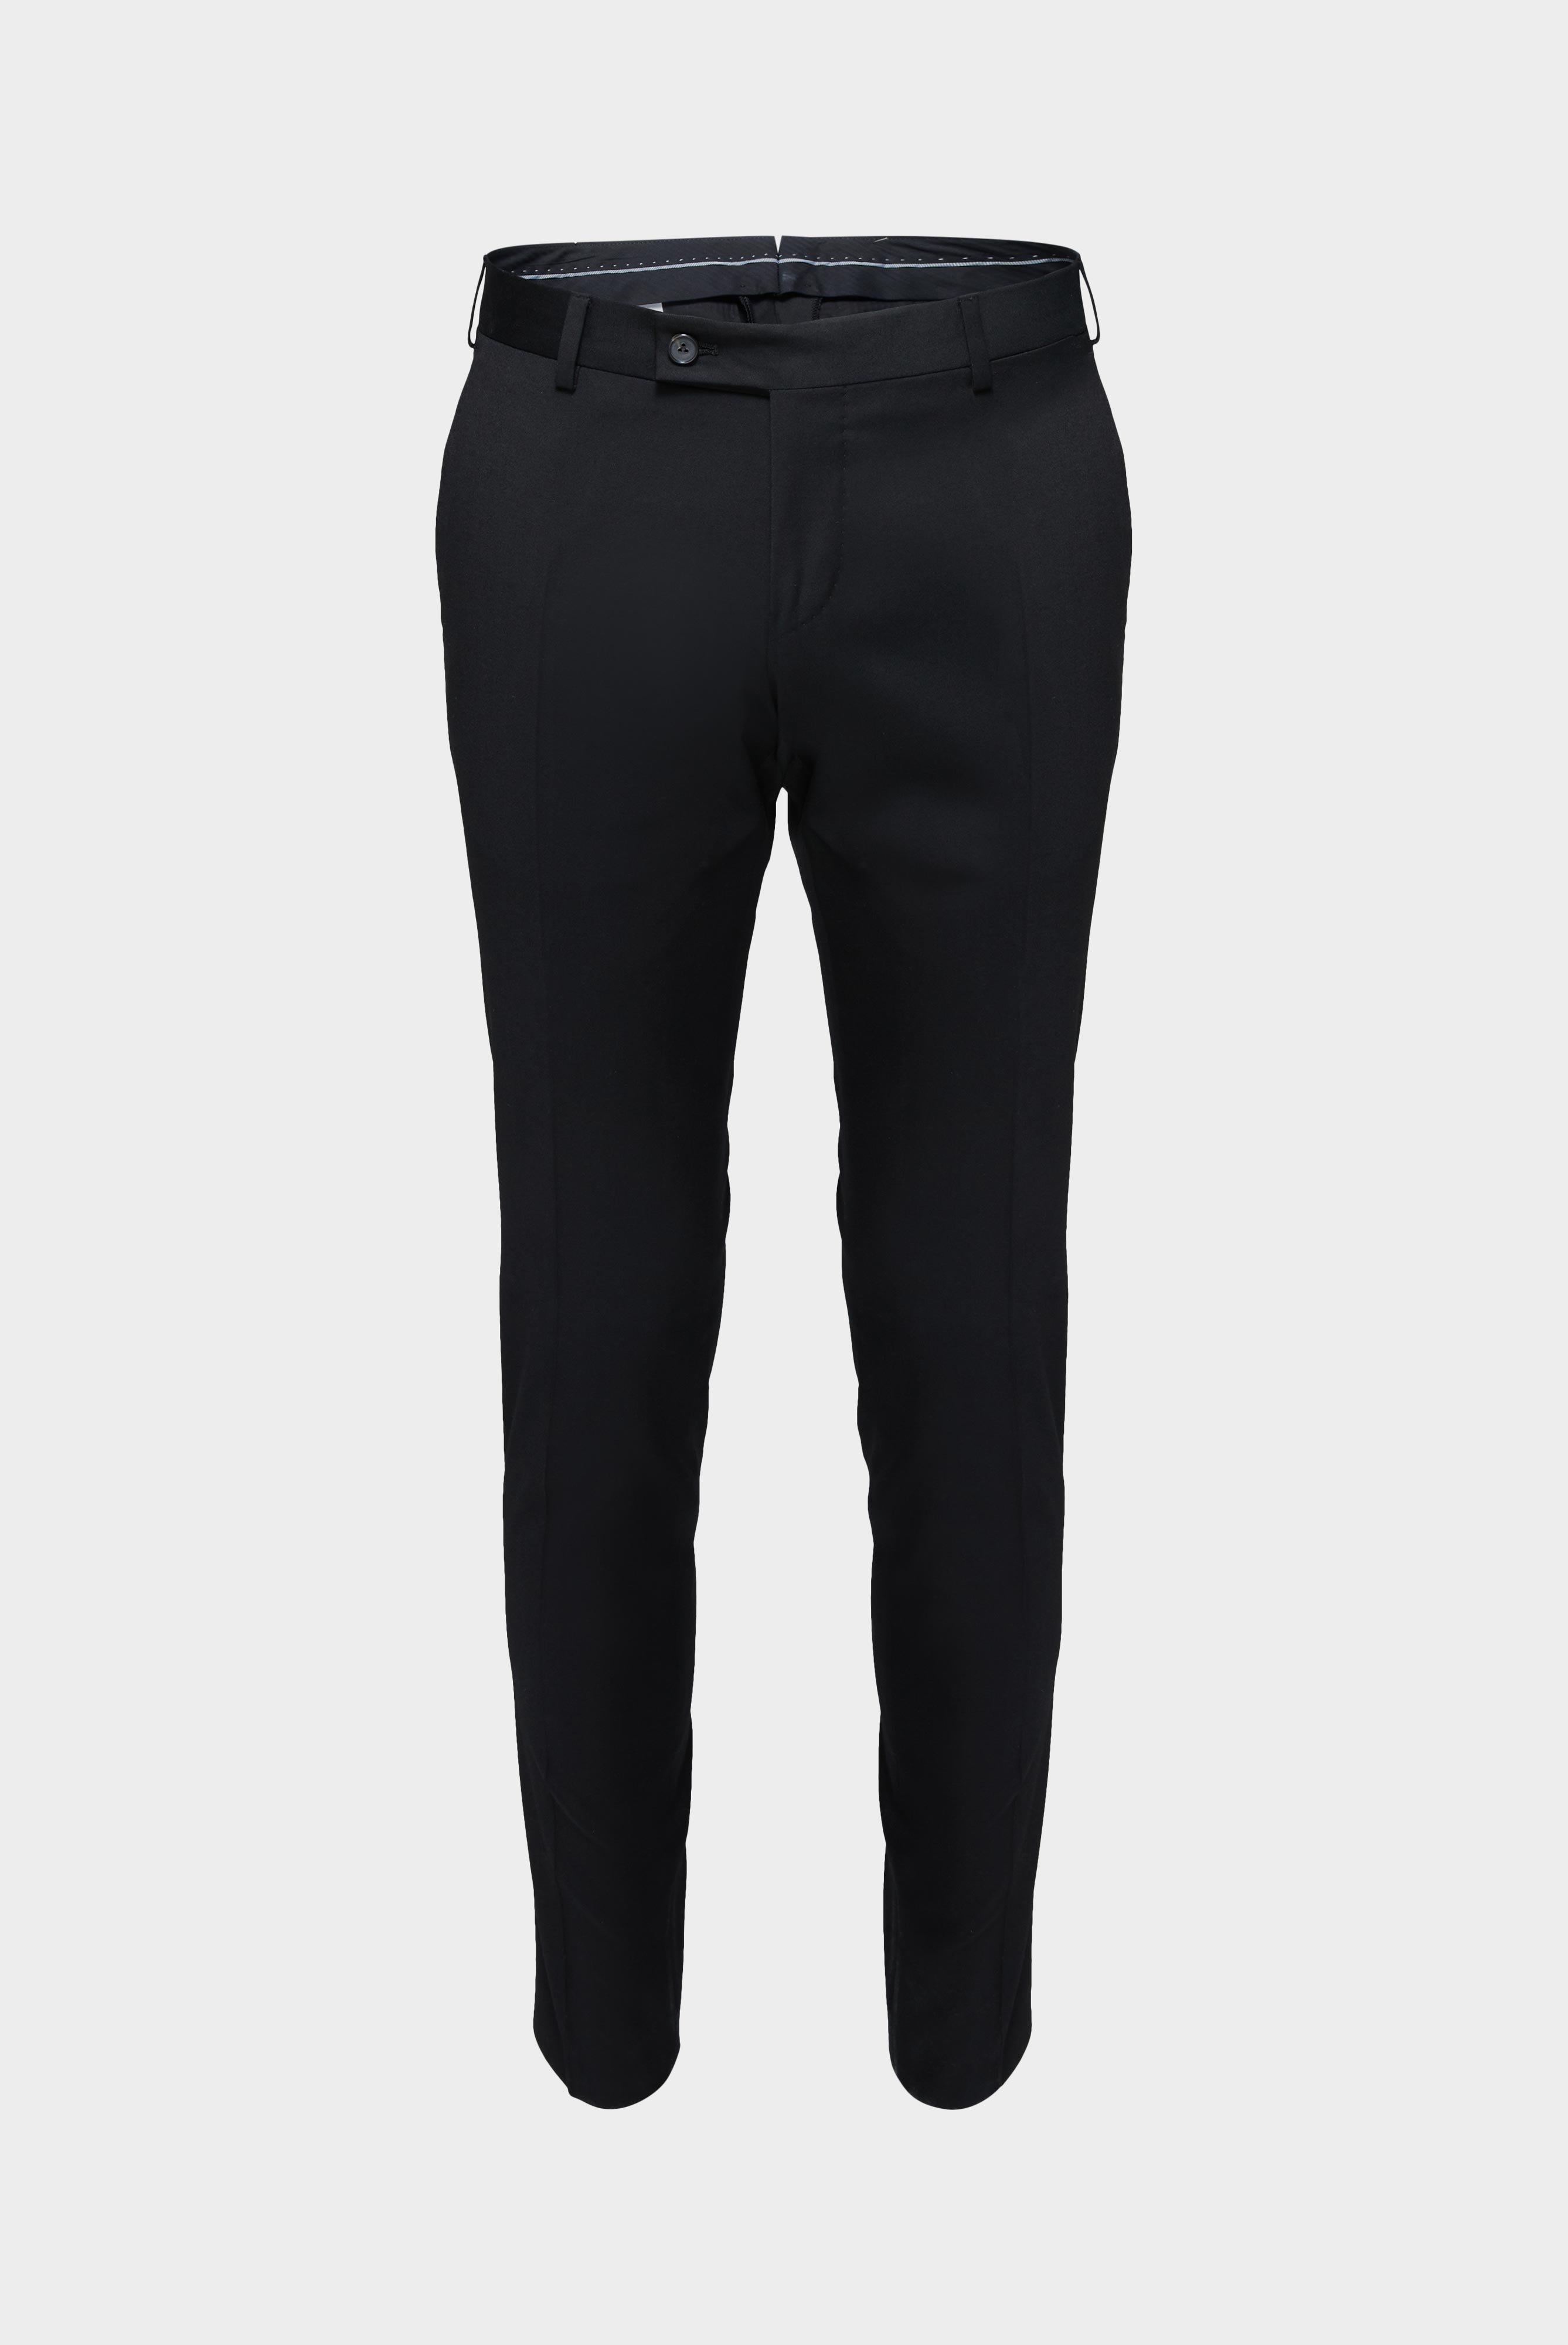 Jeans & Hosen+Hose aus Wolle Slim Fit+20.7880.16.H01010.099.44